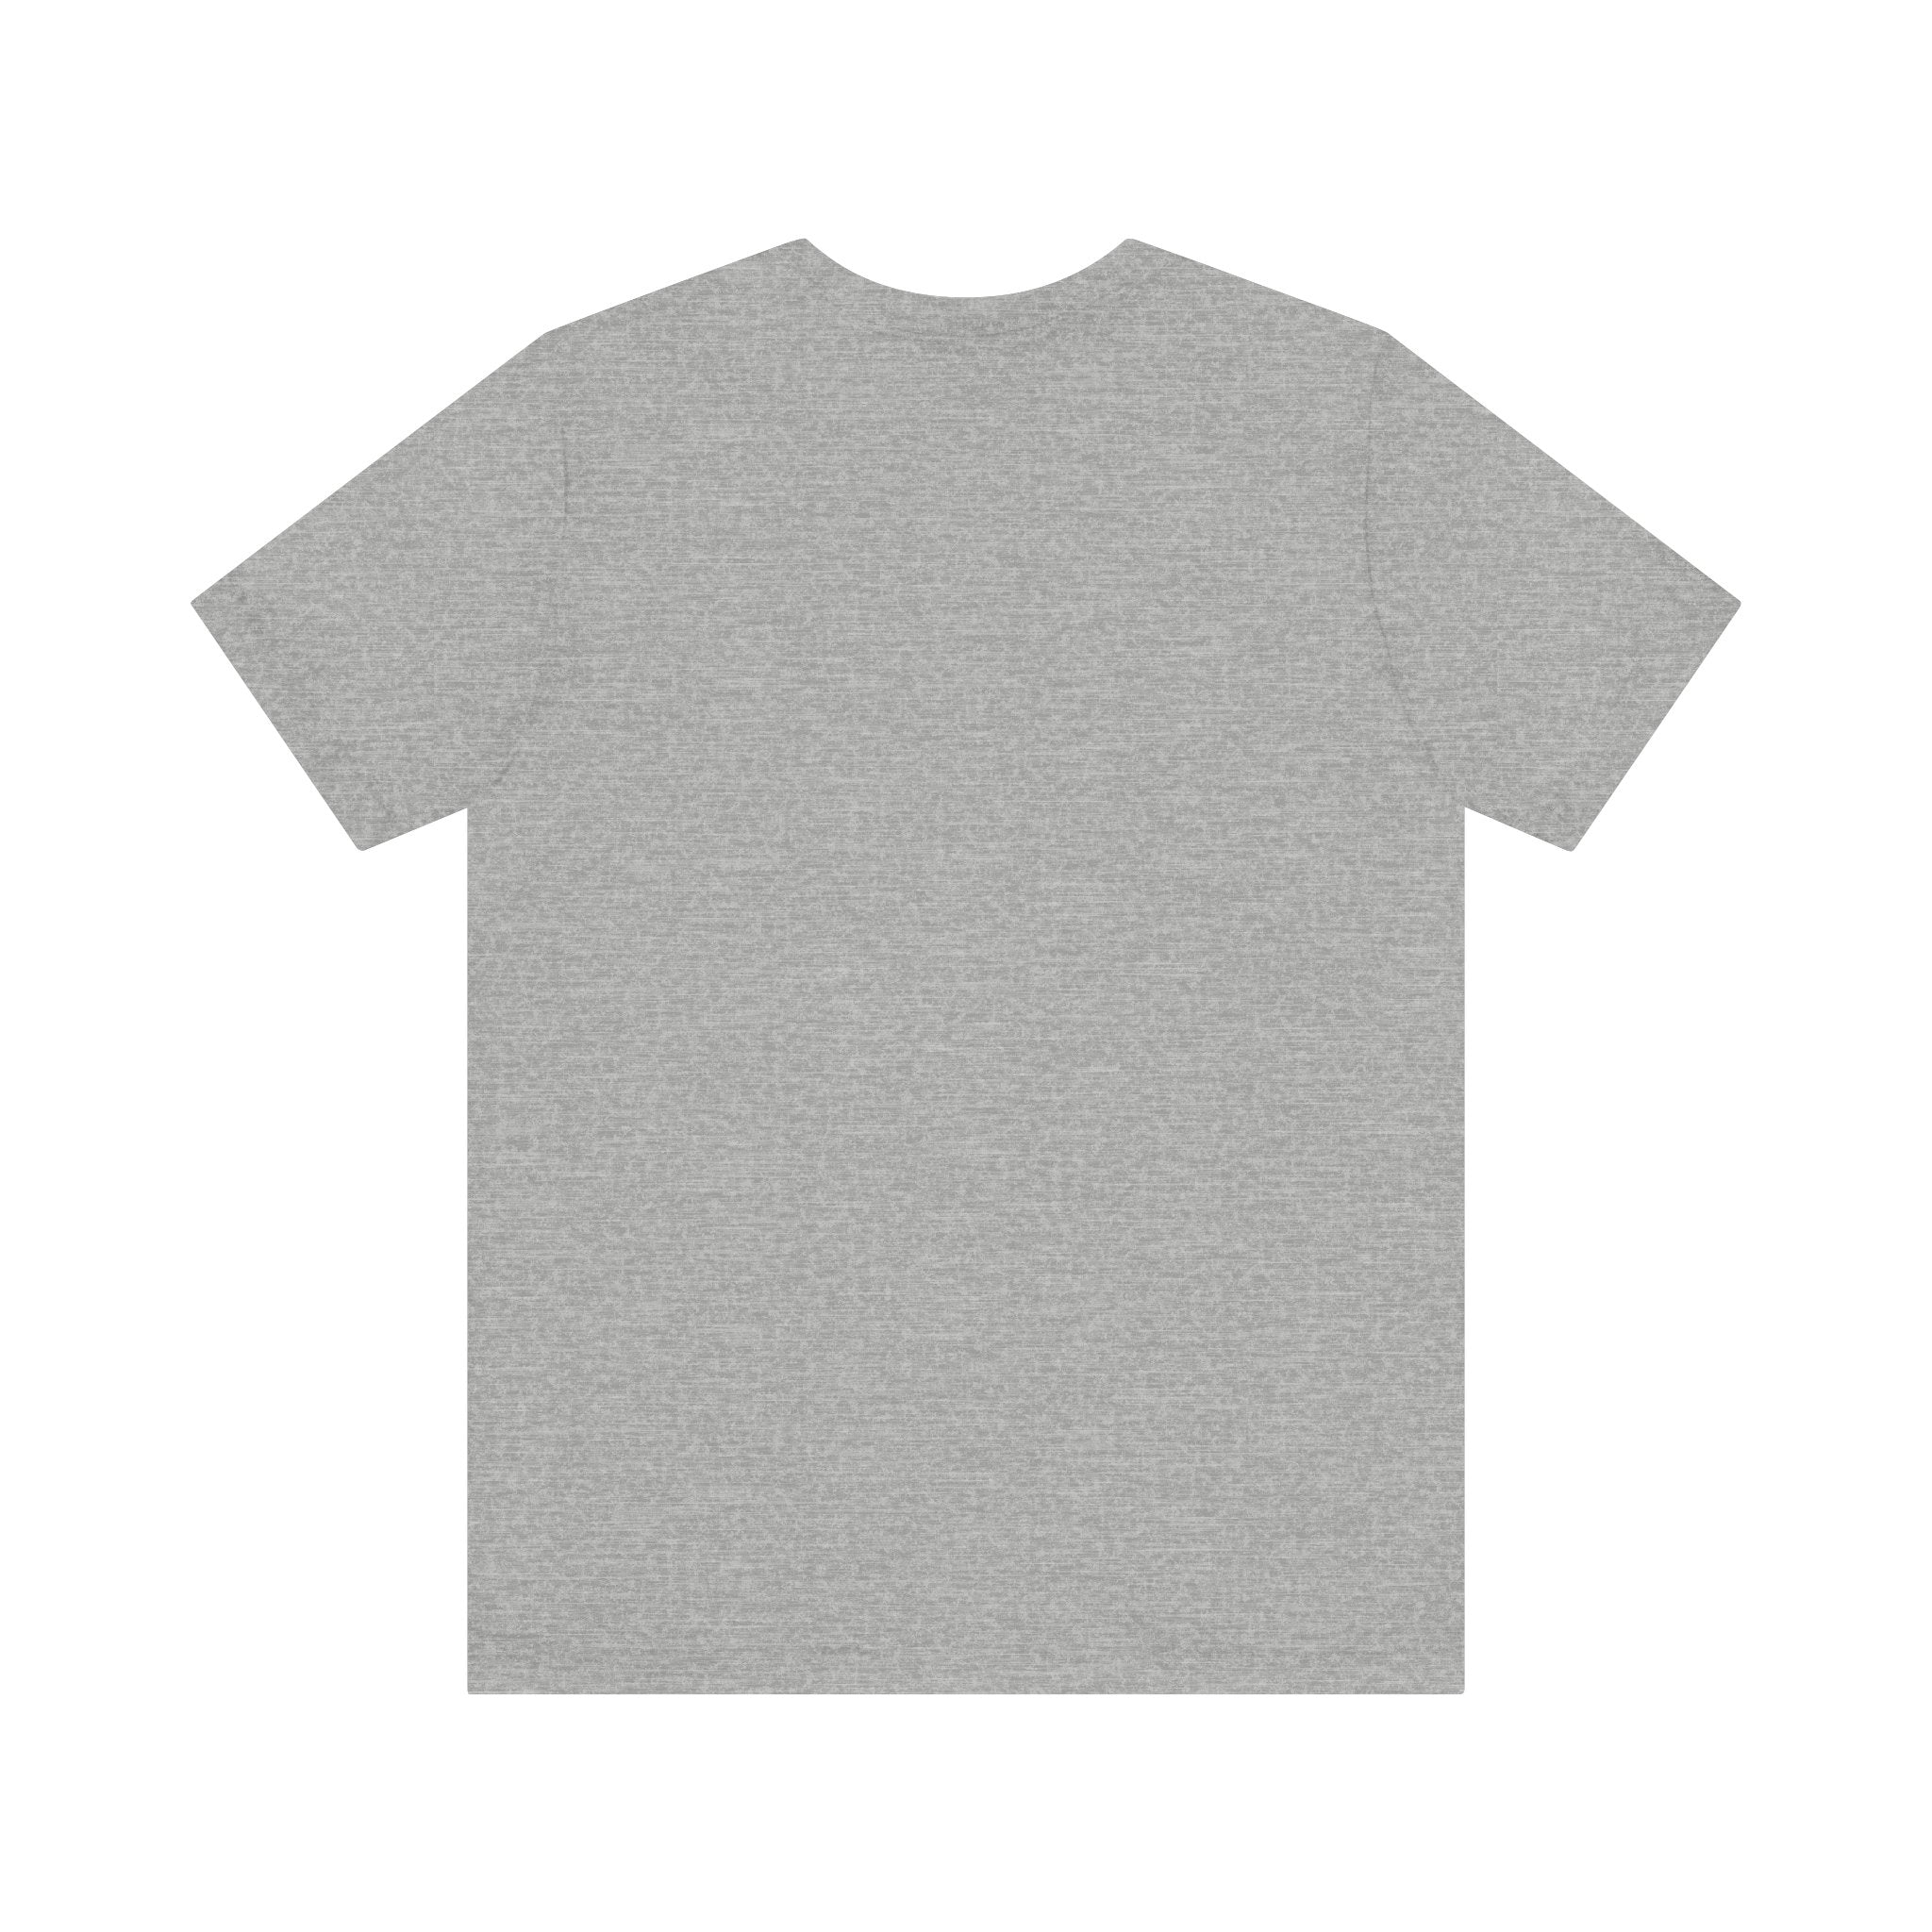 American Unisex Jersey Short Sleeve Tee, Women's Crew Neck T-shirt, Regular Fit Shirt for Men, DTG Print, Classic Style